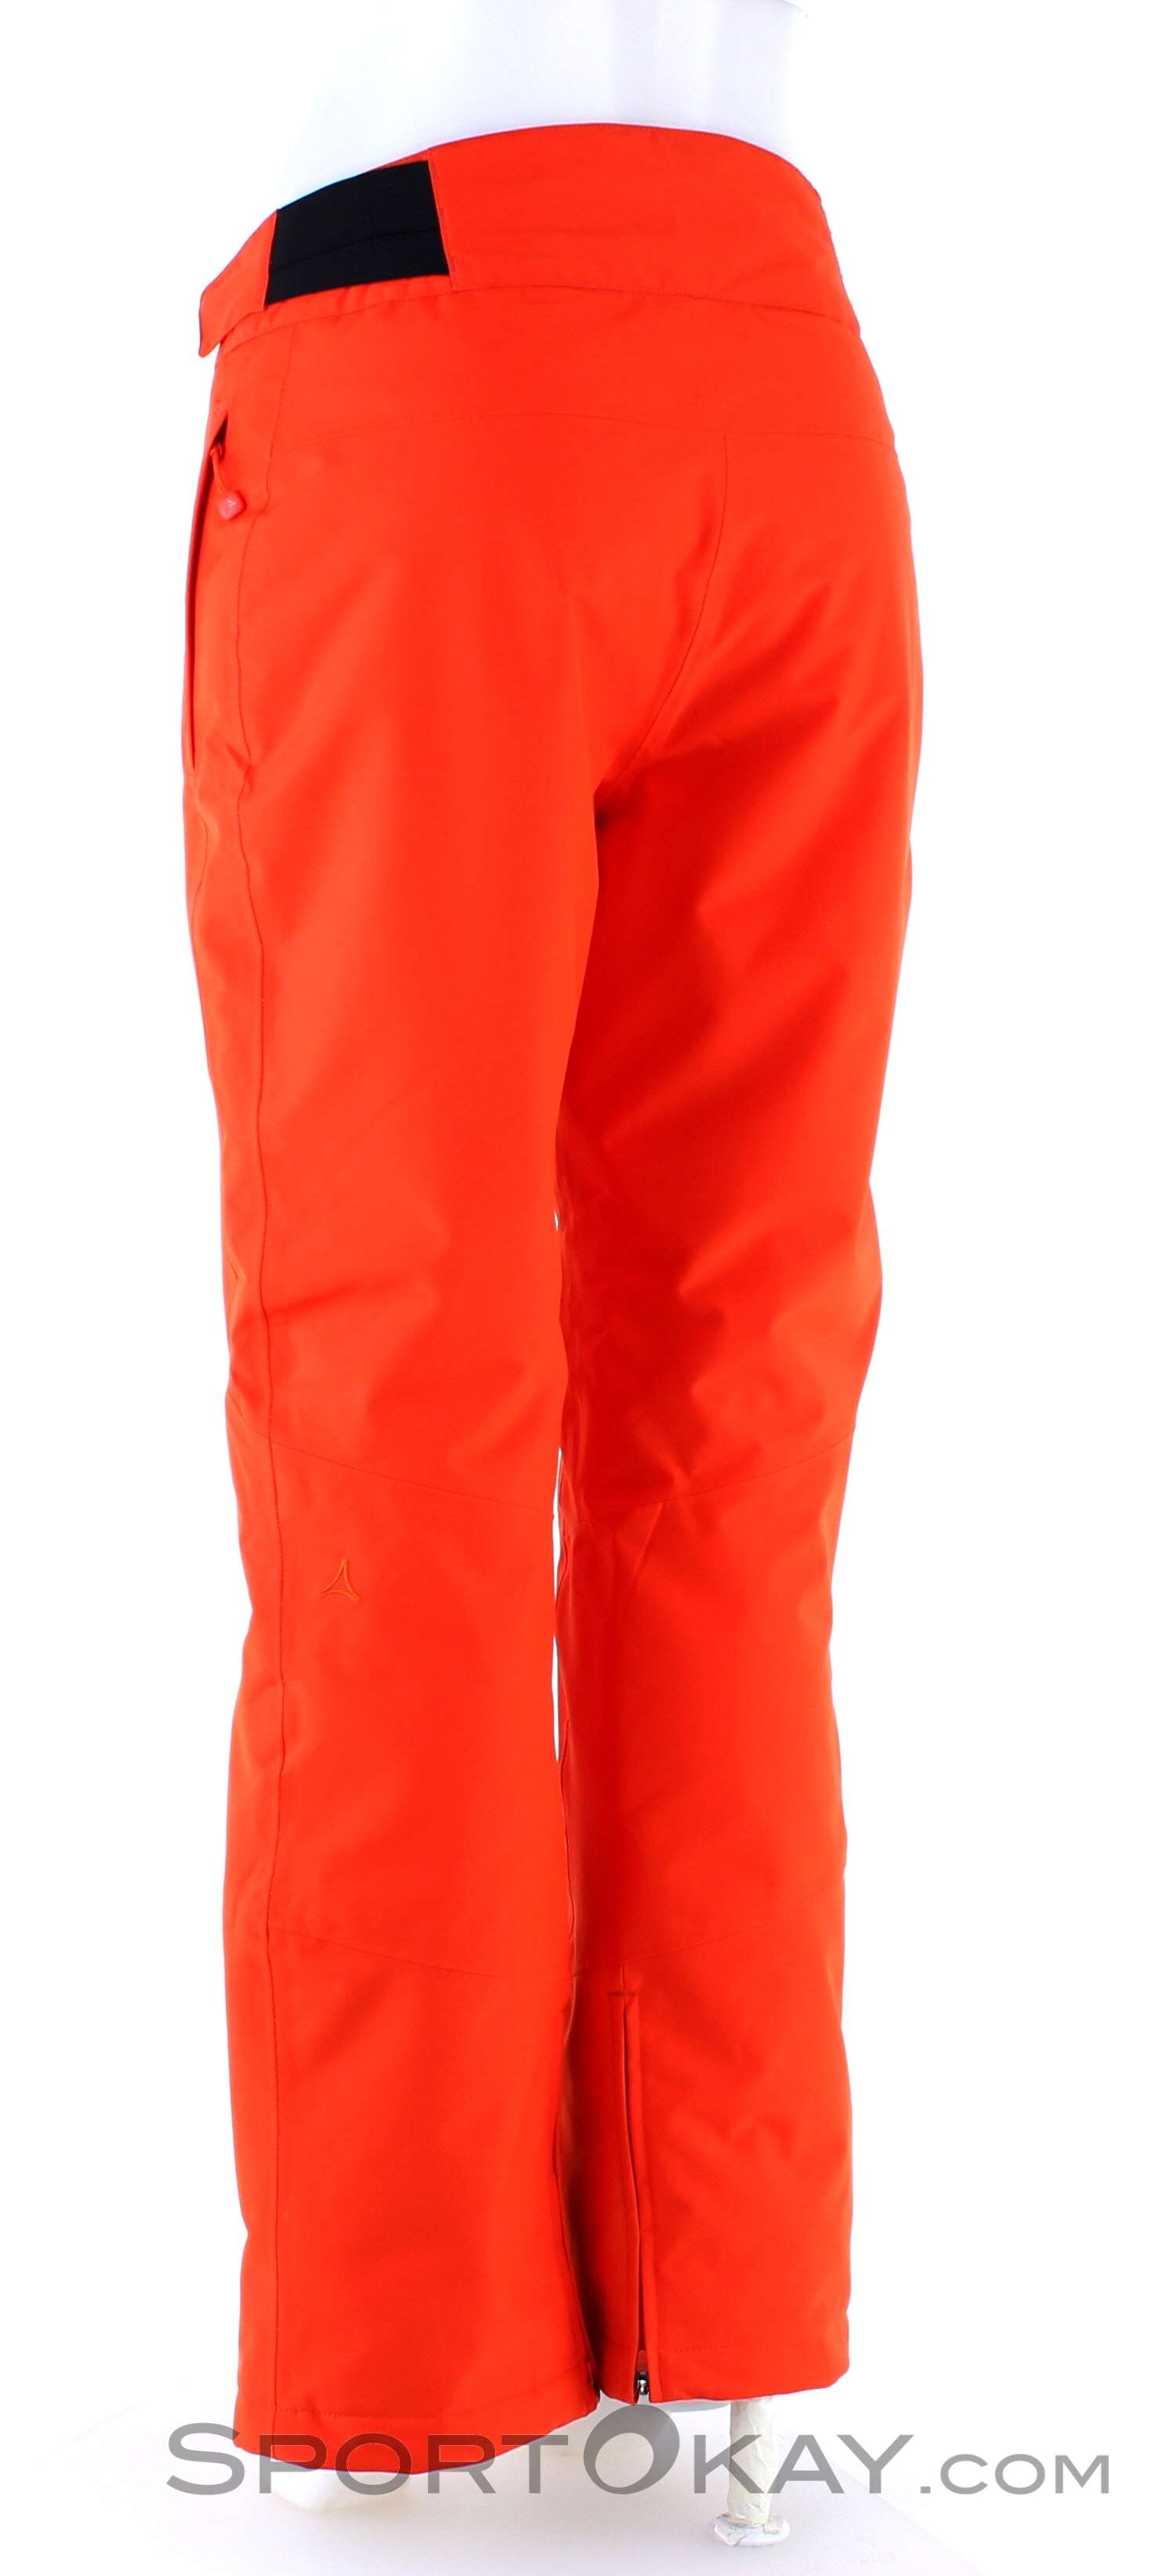 Pantaloni da Neve Impermeabili e Antivento con Elastico a 2 Vie Traspiranti Schöffel Ski Pants Pinzgau1 con ghetta antineve Donna 